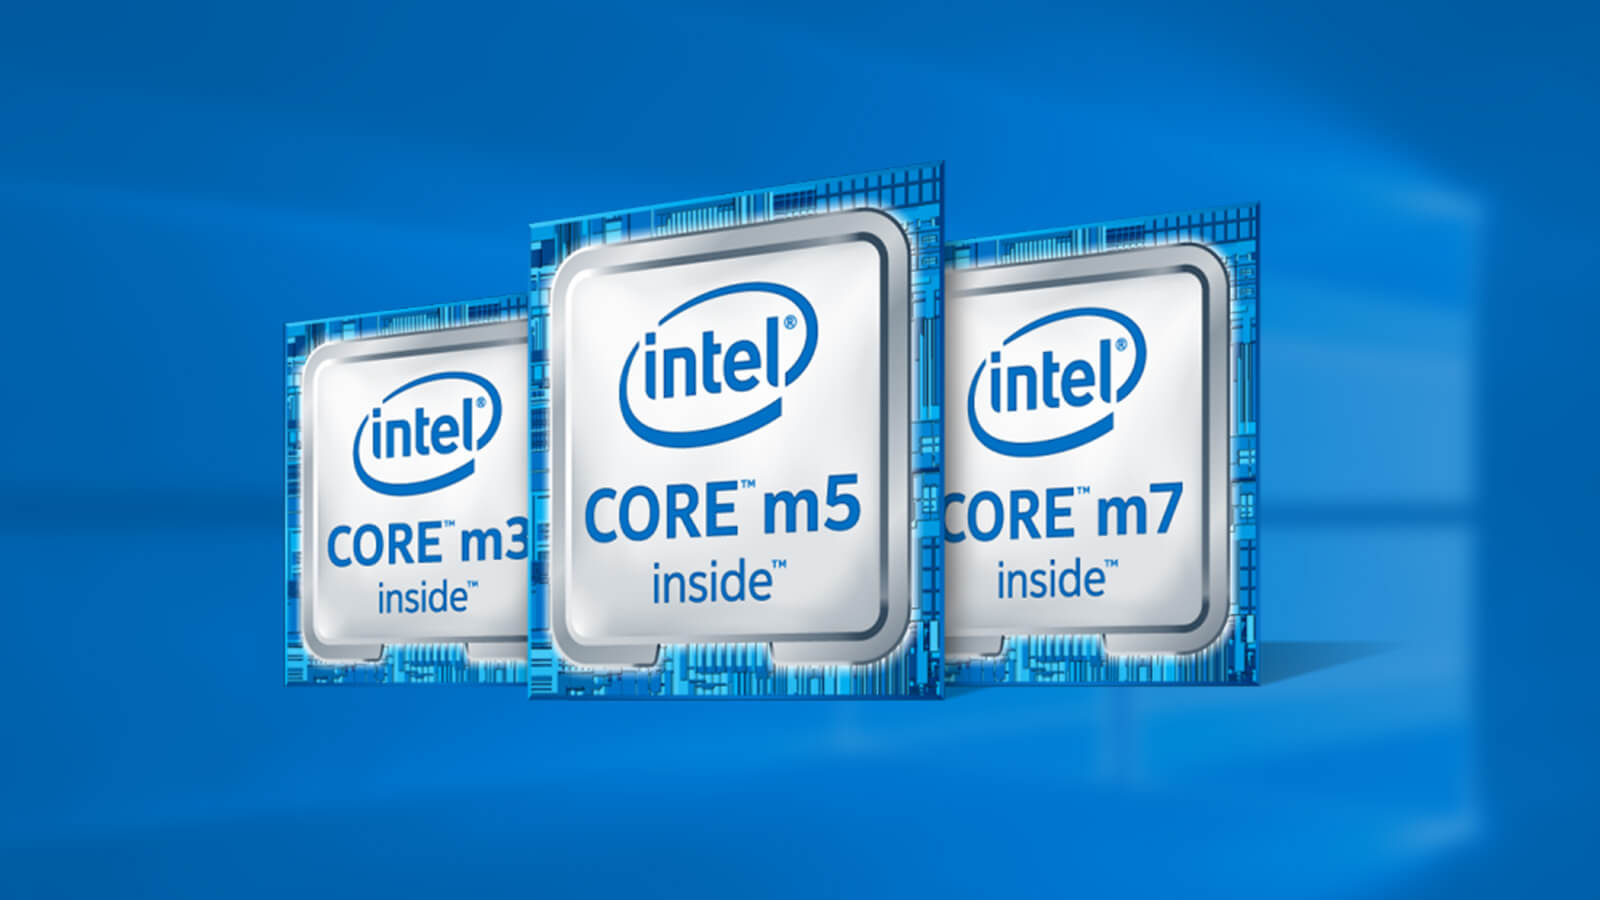 Intel i5 4400. Процессорах Intel Core i3 i5 i7. Значок Intel Core i5. Intel Core i3 12100. Интел кор i3 инсайд.